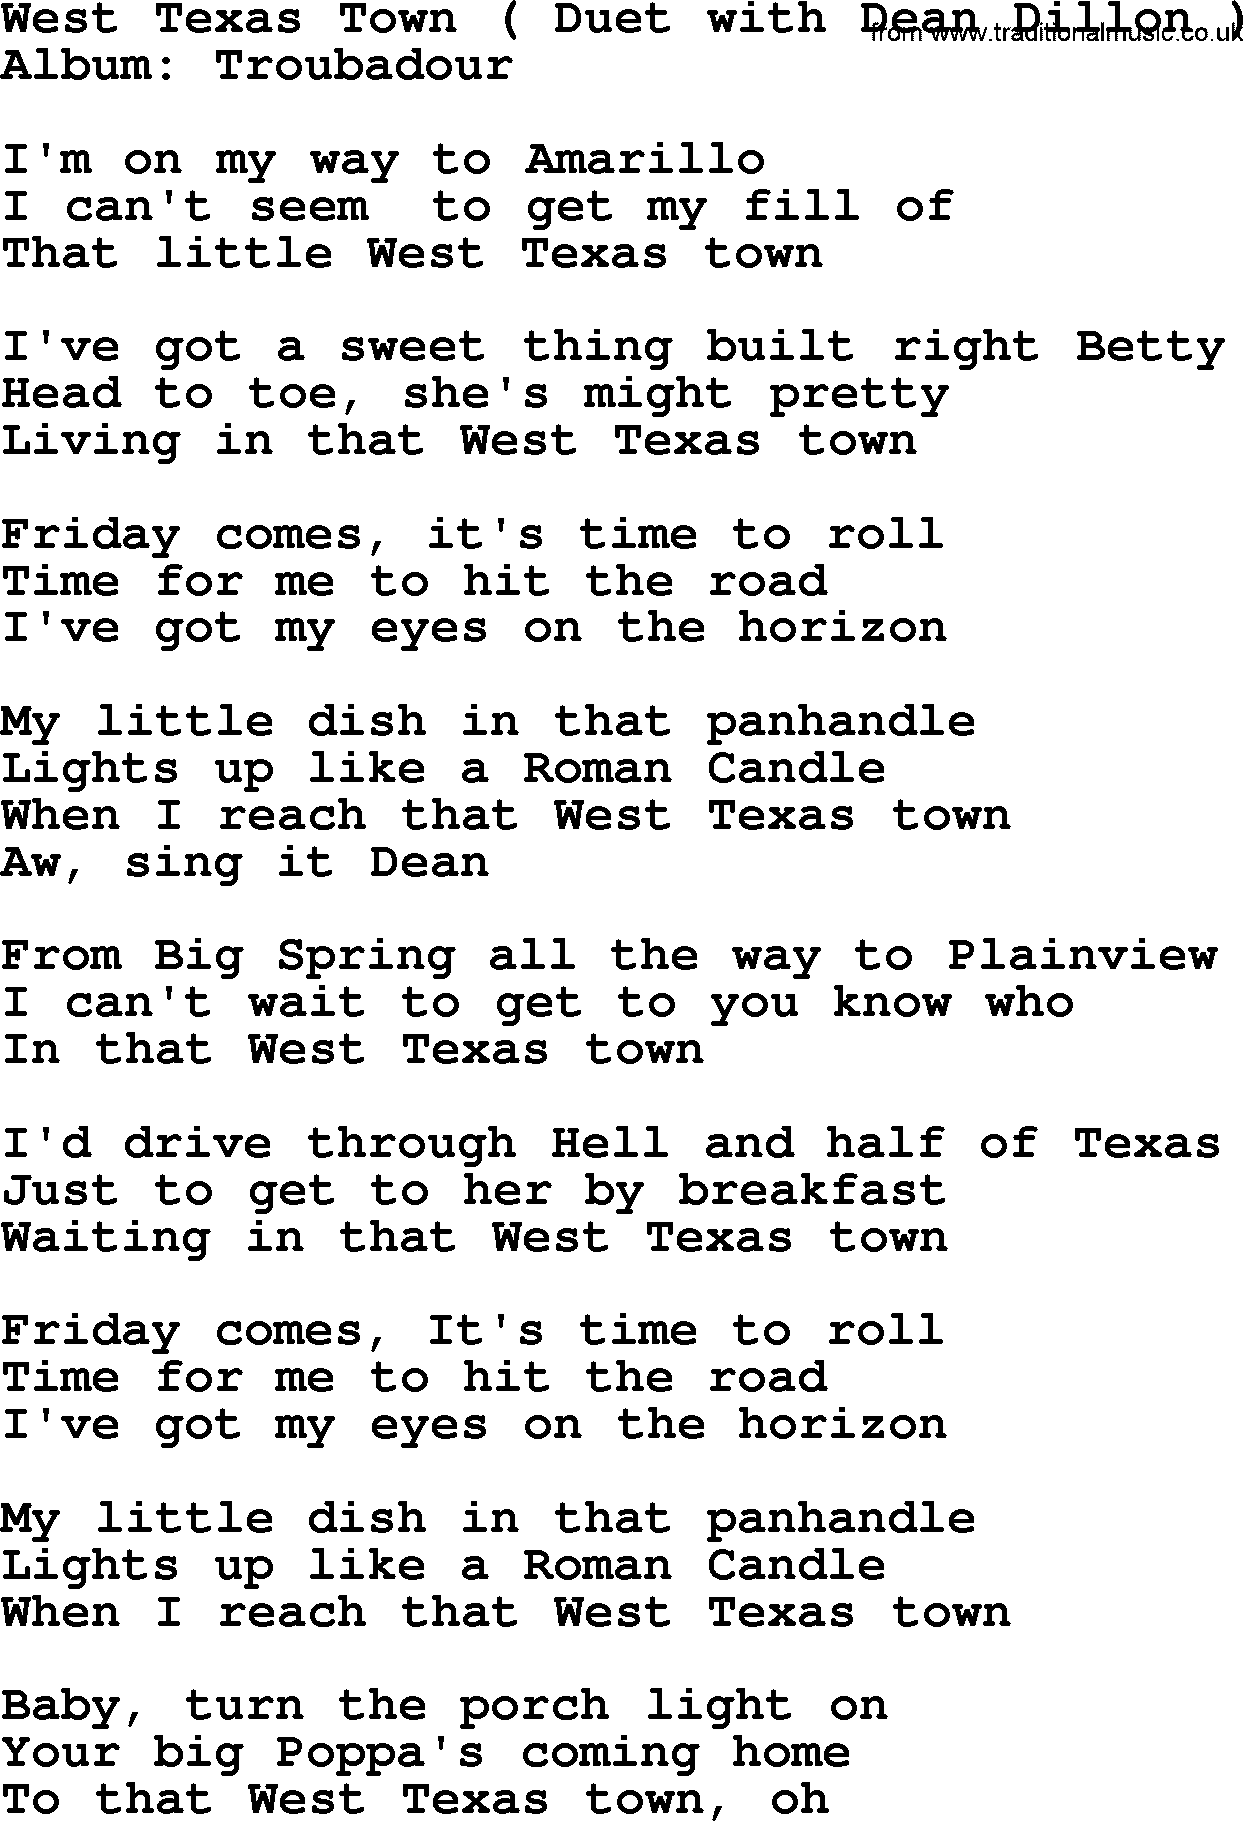 George Strait song: West Texas Town, lyrics